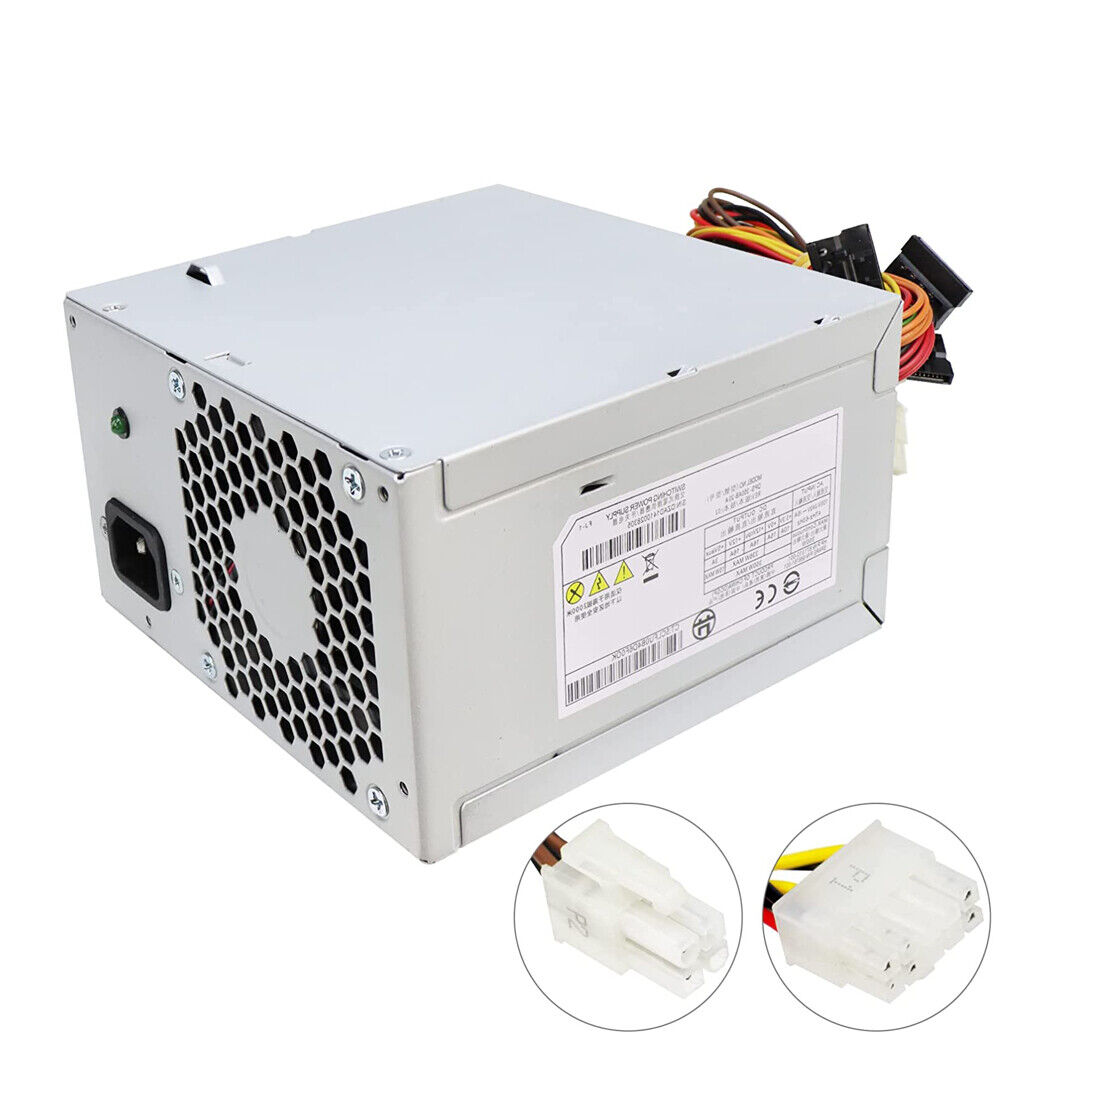 New DPS-350AB-20A 350W ATX Power Supply Fors HP ProLiant ML310e G8 671310-001